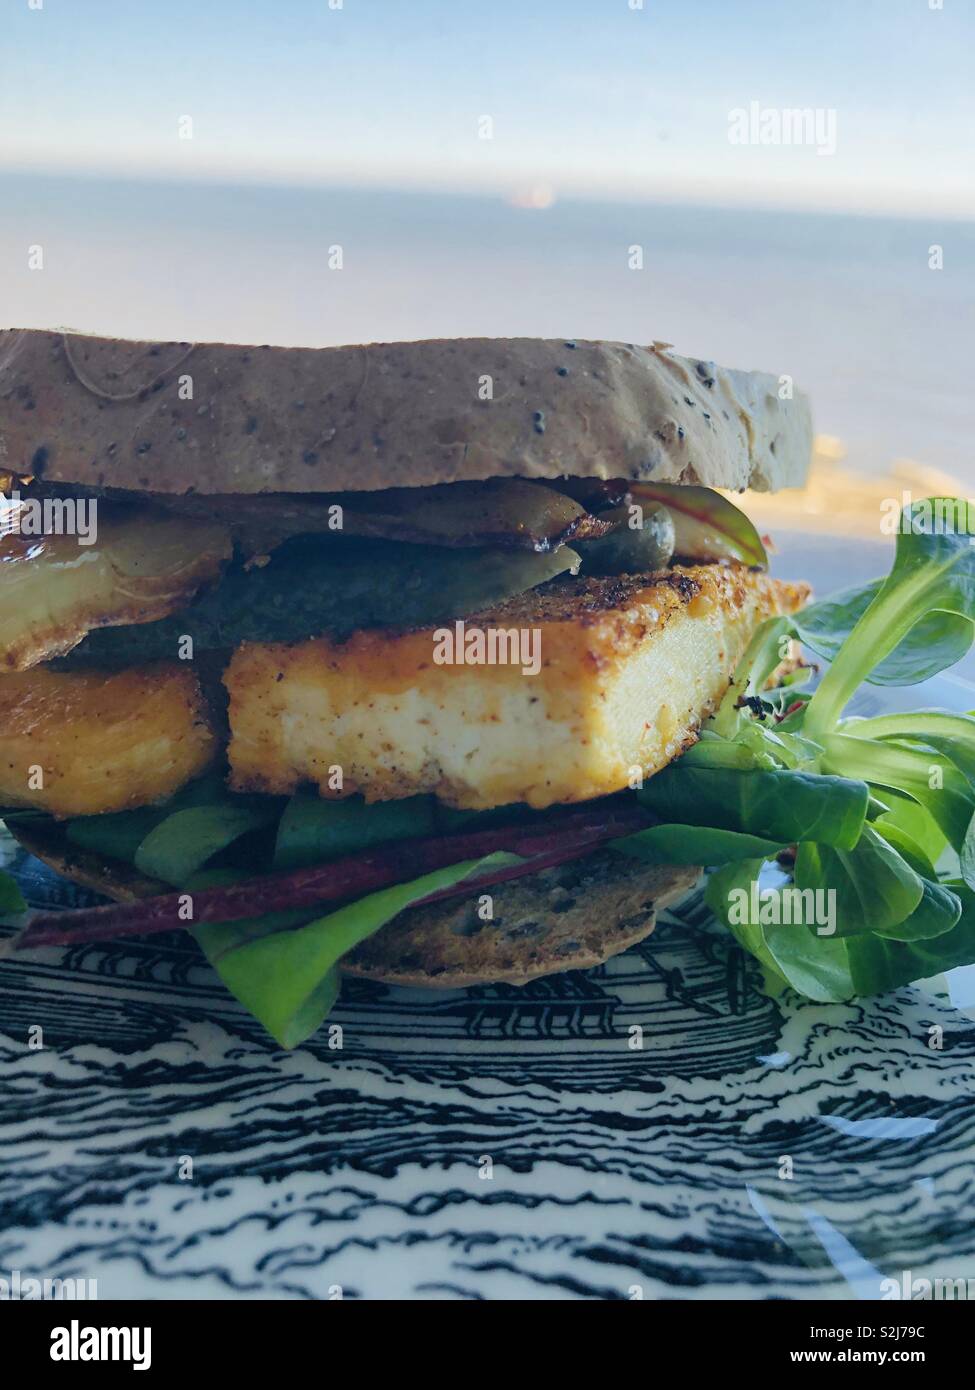 Vegan fried tofu sandwich with gluten free bread Stock Photo